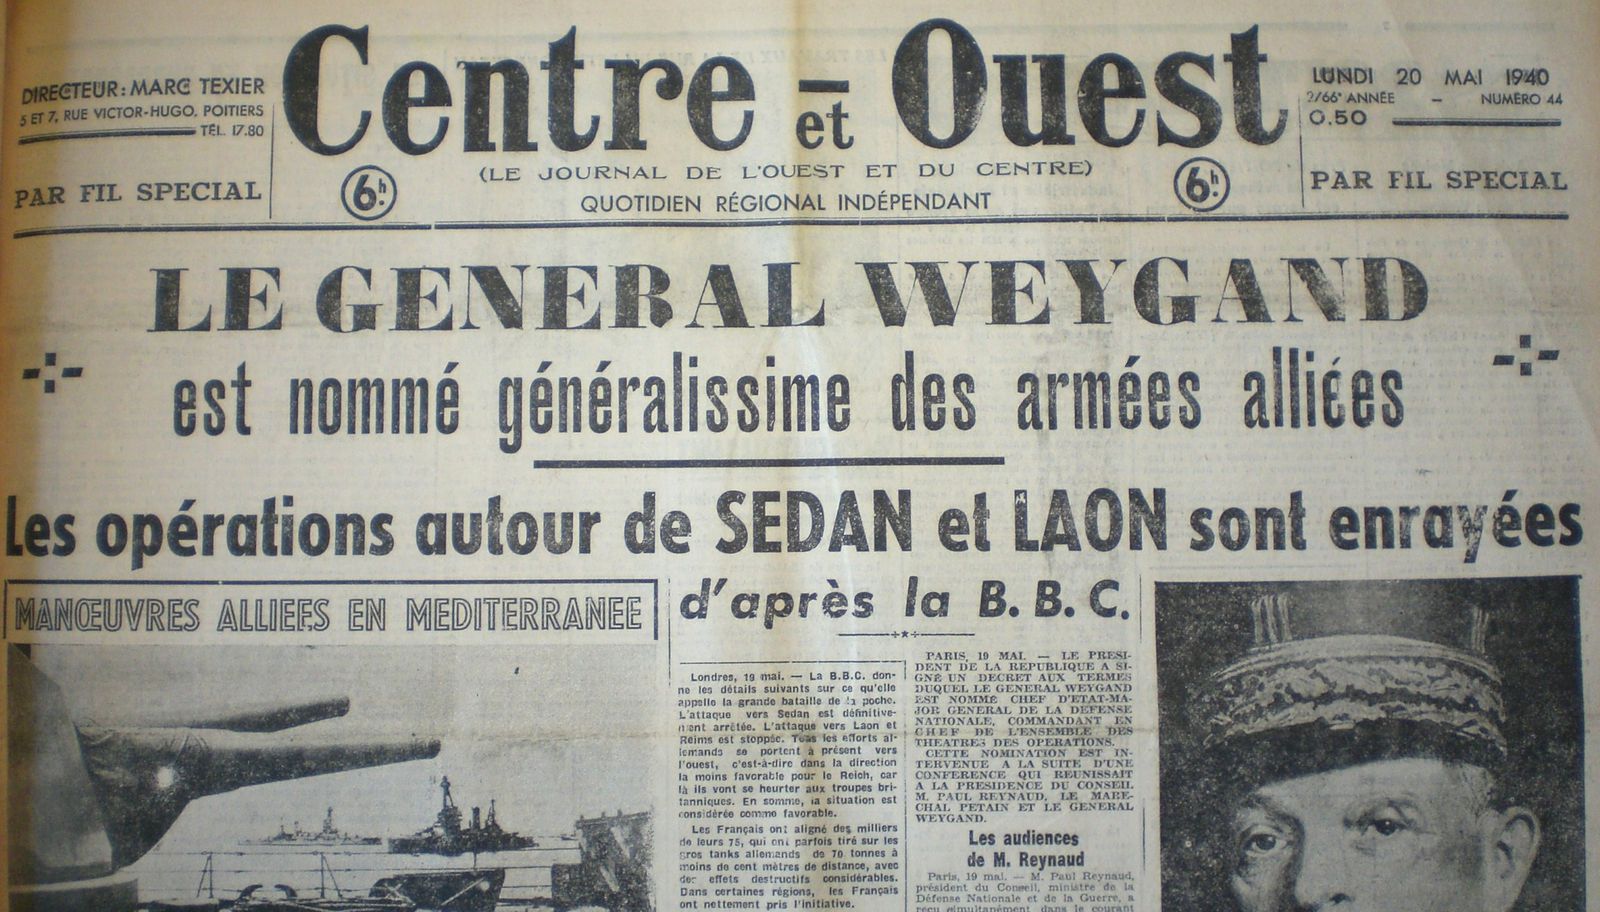 Weygand nommé généralissime 20 MAI 1940